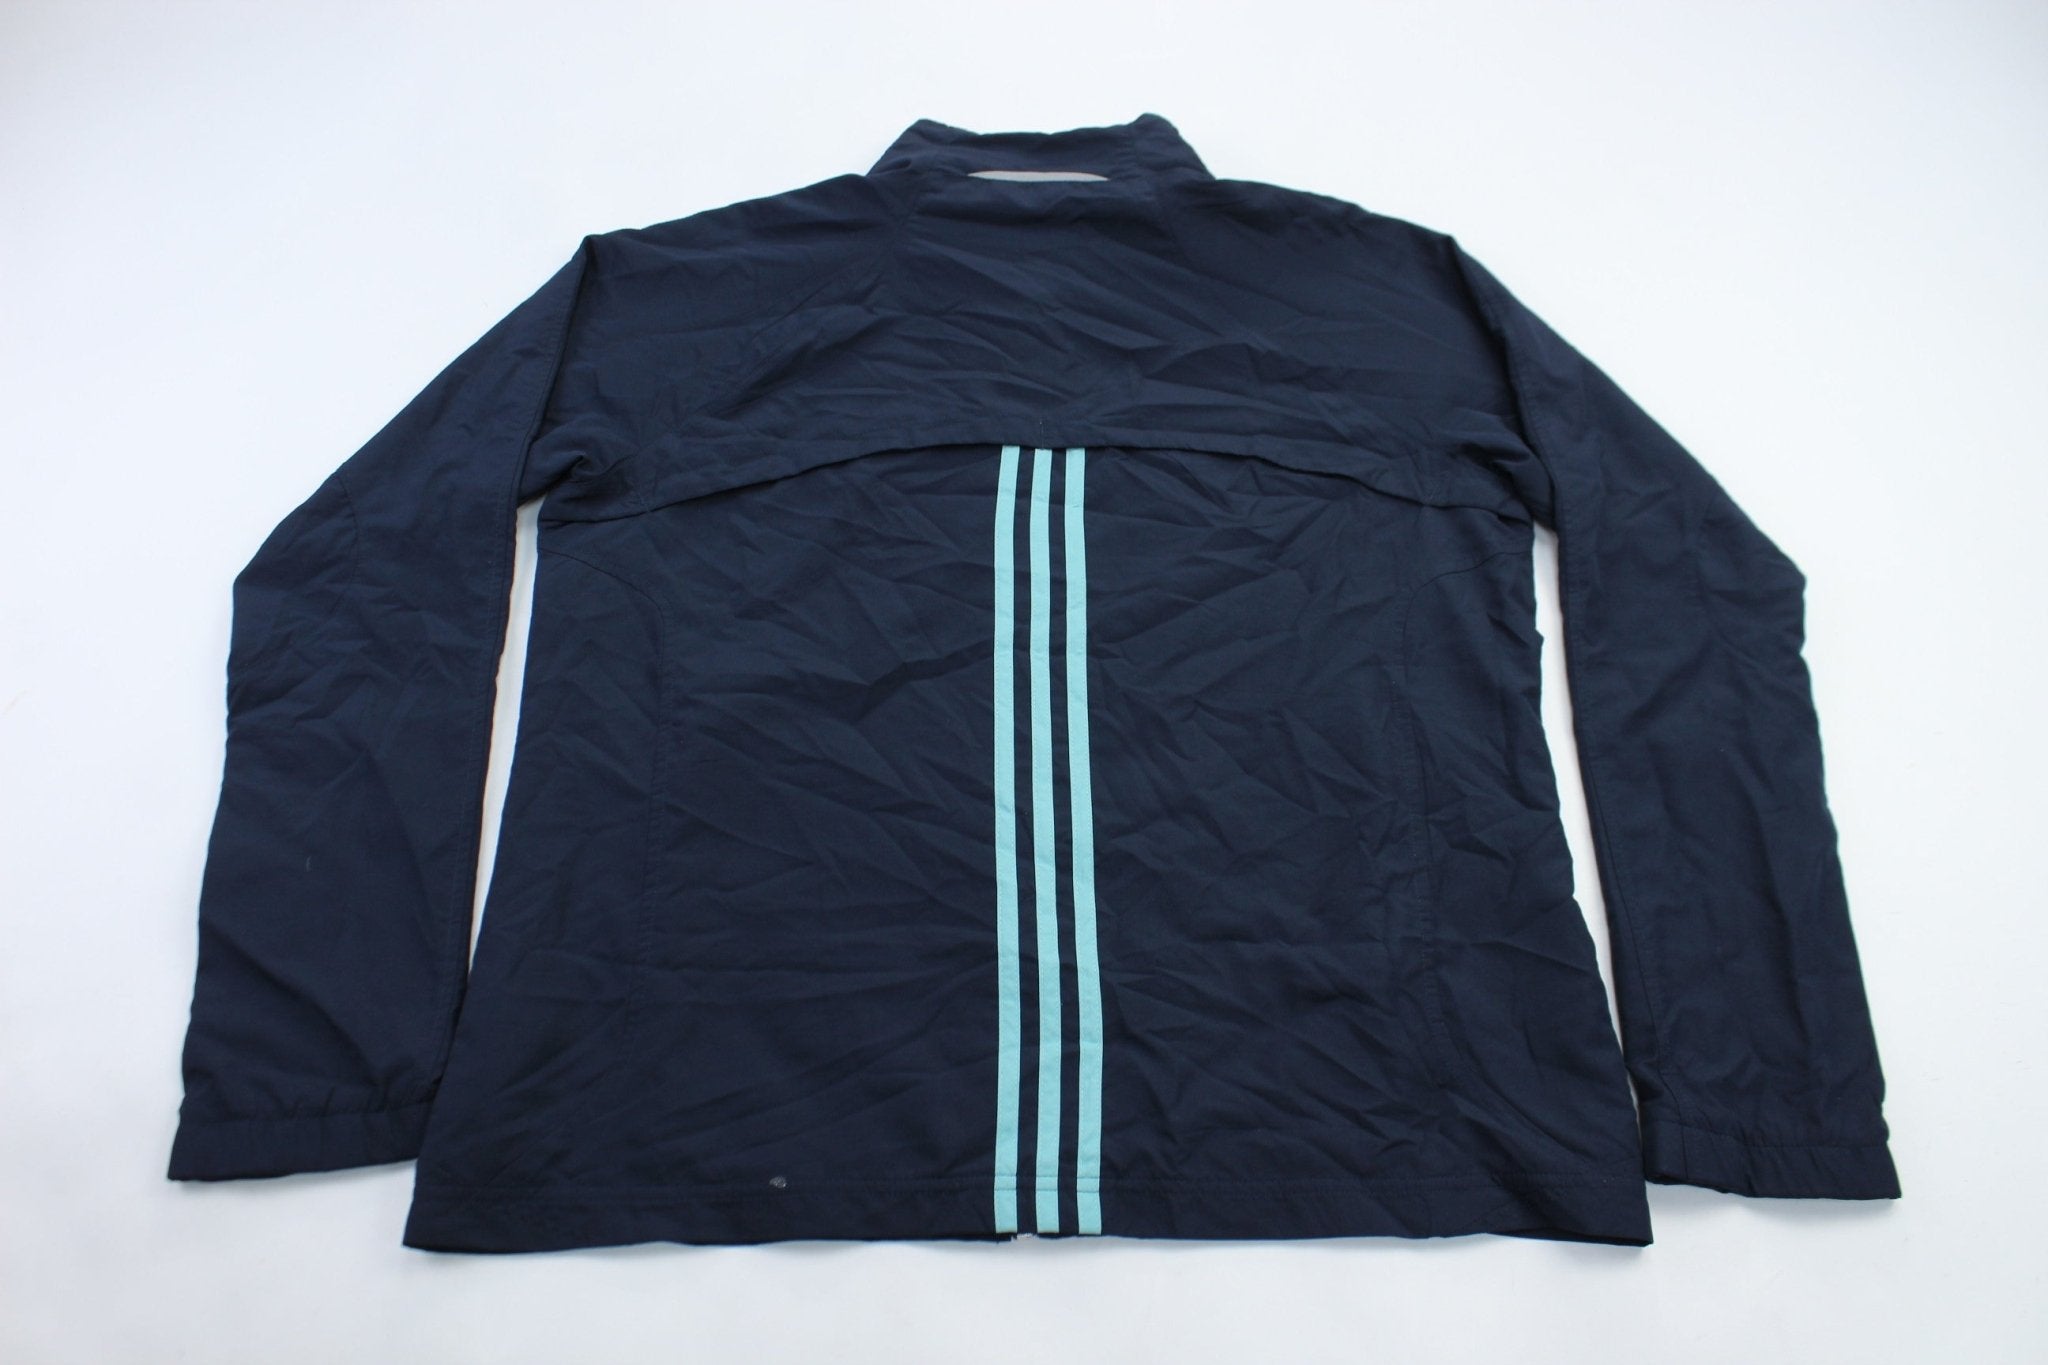 Women's Adidas Embroidered Logo Navy Blue & Light Blue Striped Jacket - ThriftedThreads.com